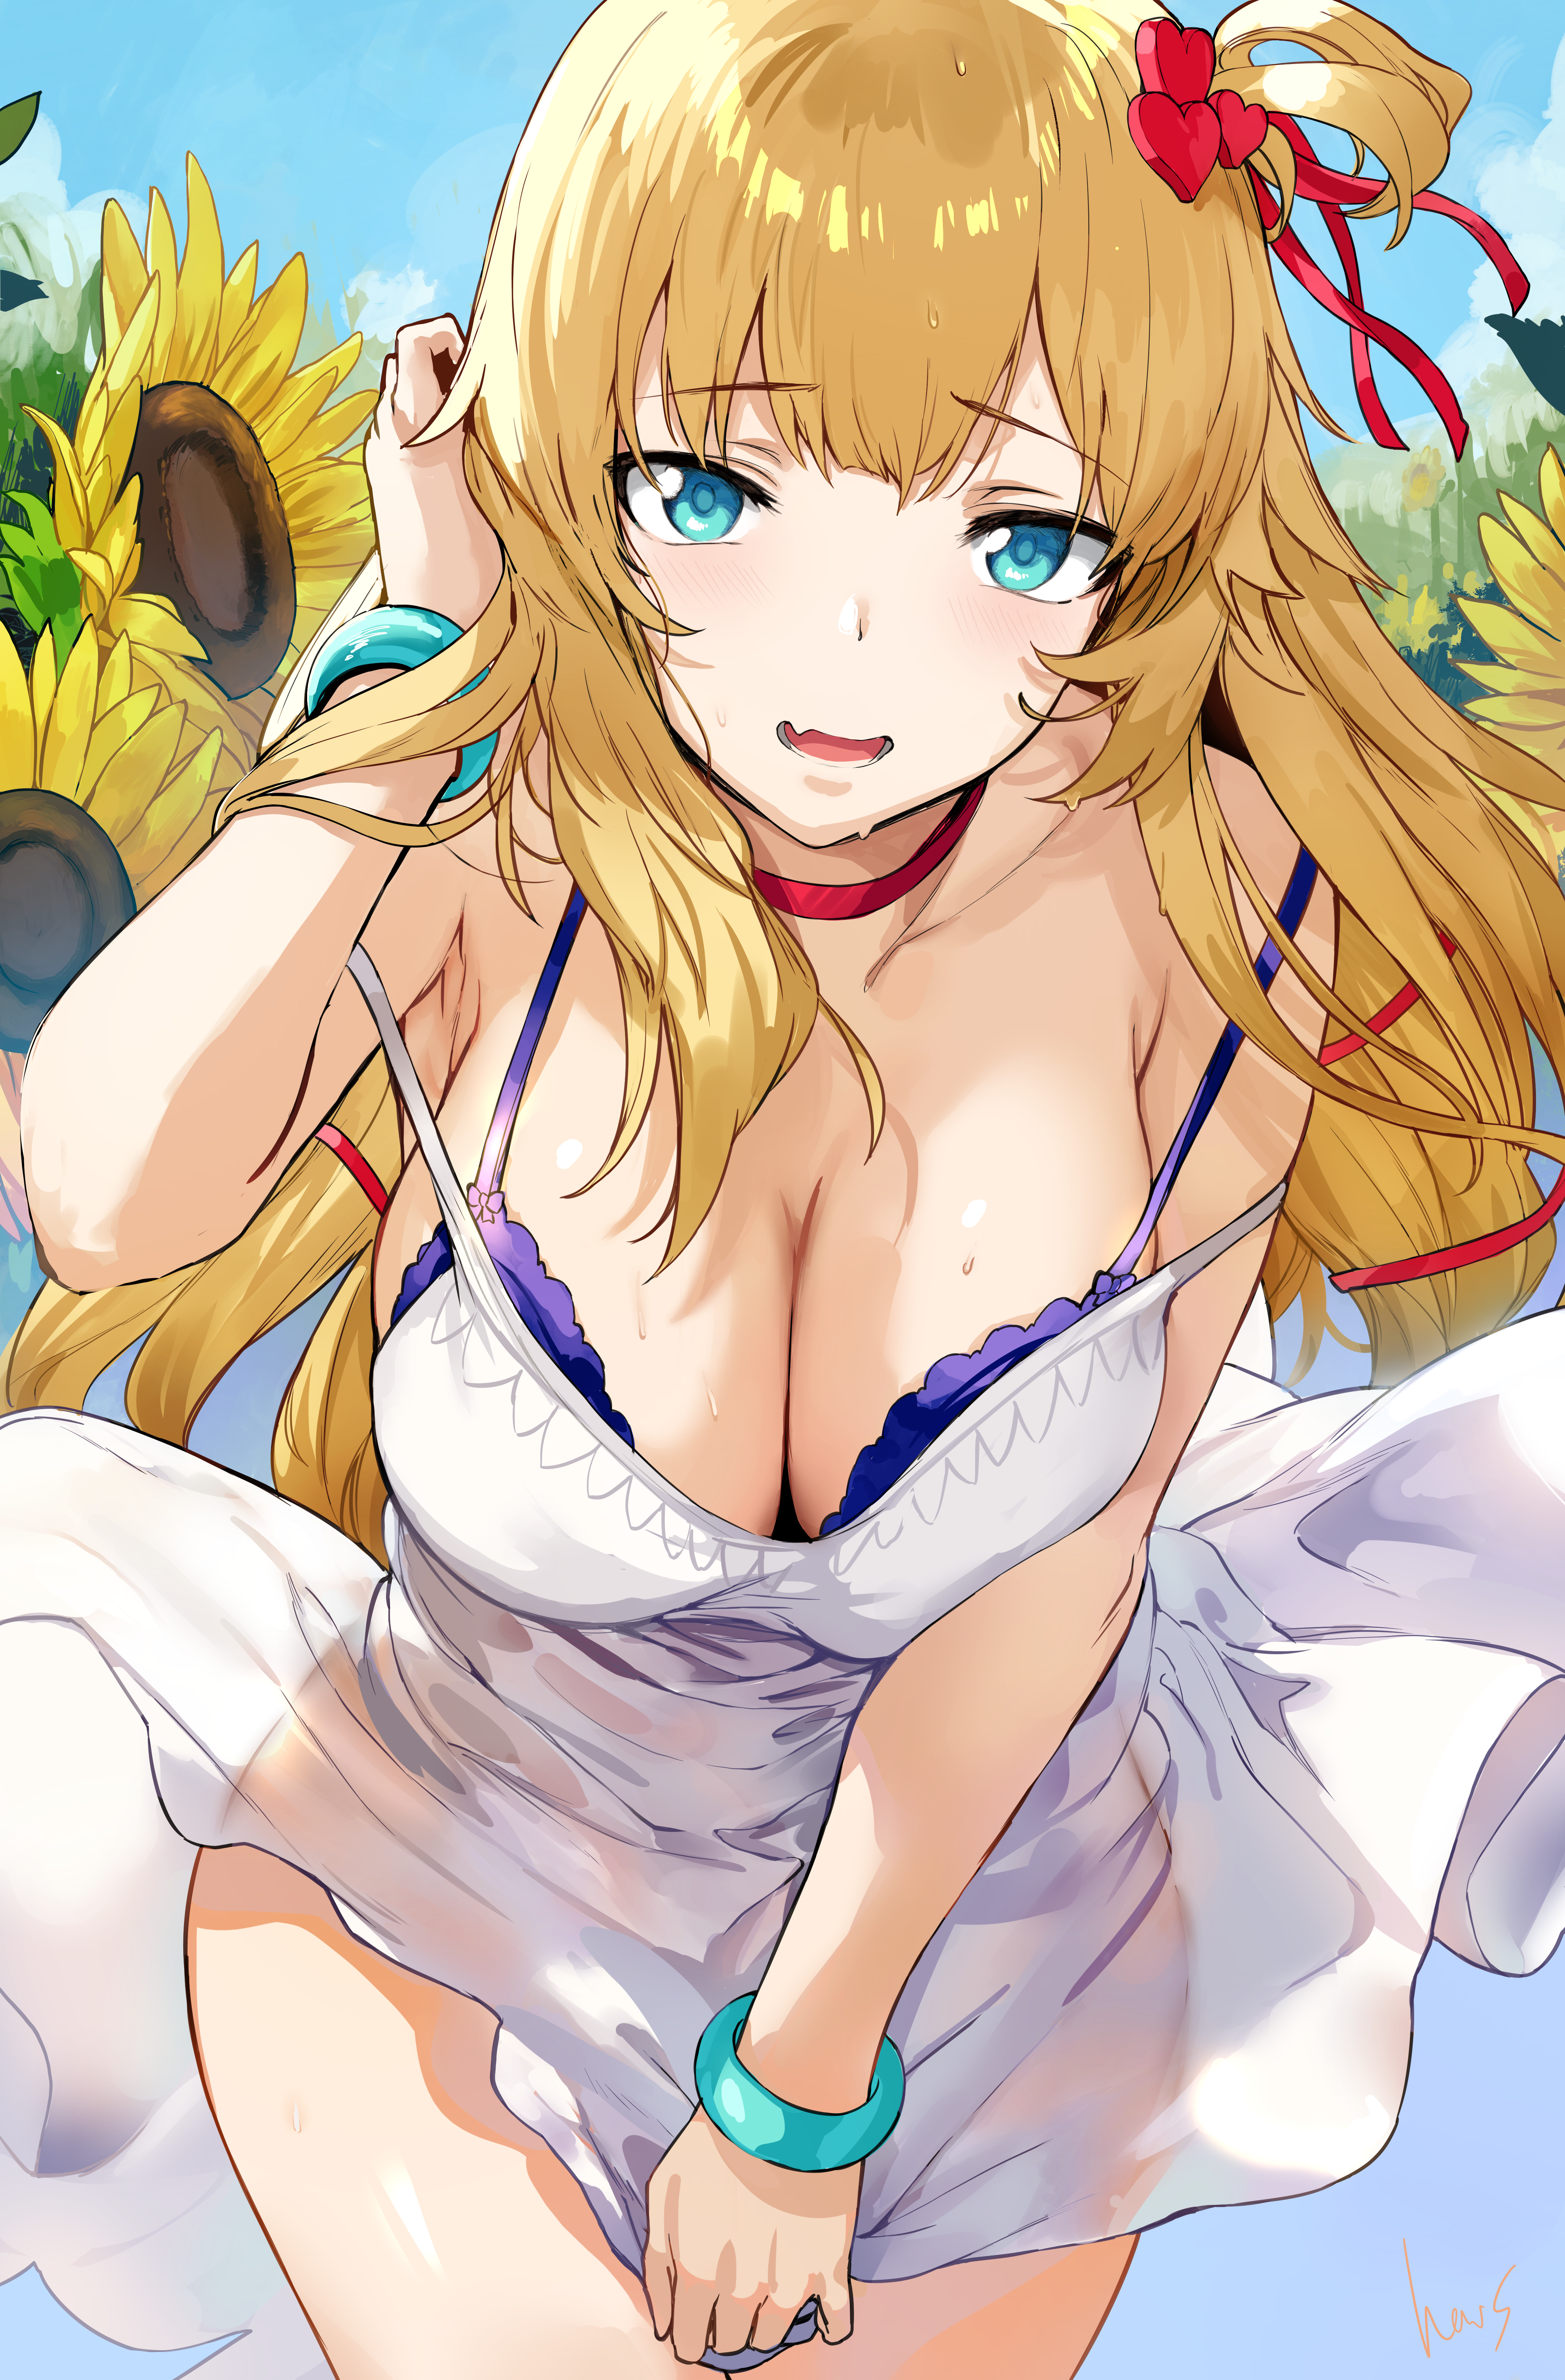 Anime 4586x6975 anime girls Hololive Akai Haato Hews cleavage frontal view sun dress bra blonde aqua eyes big boobs